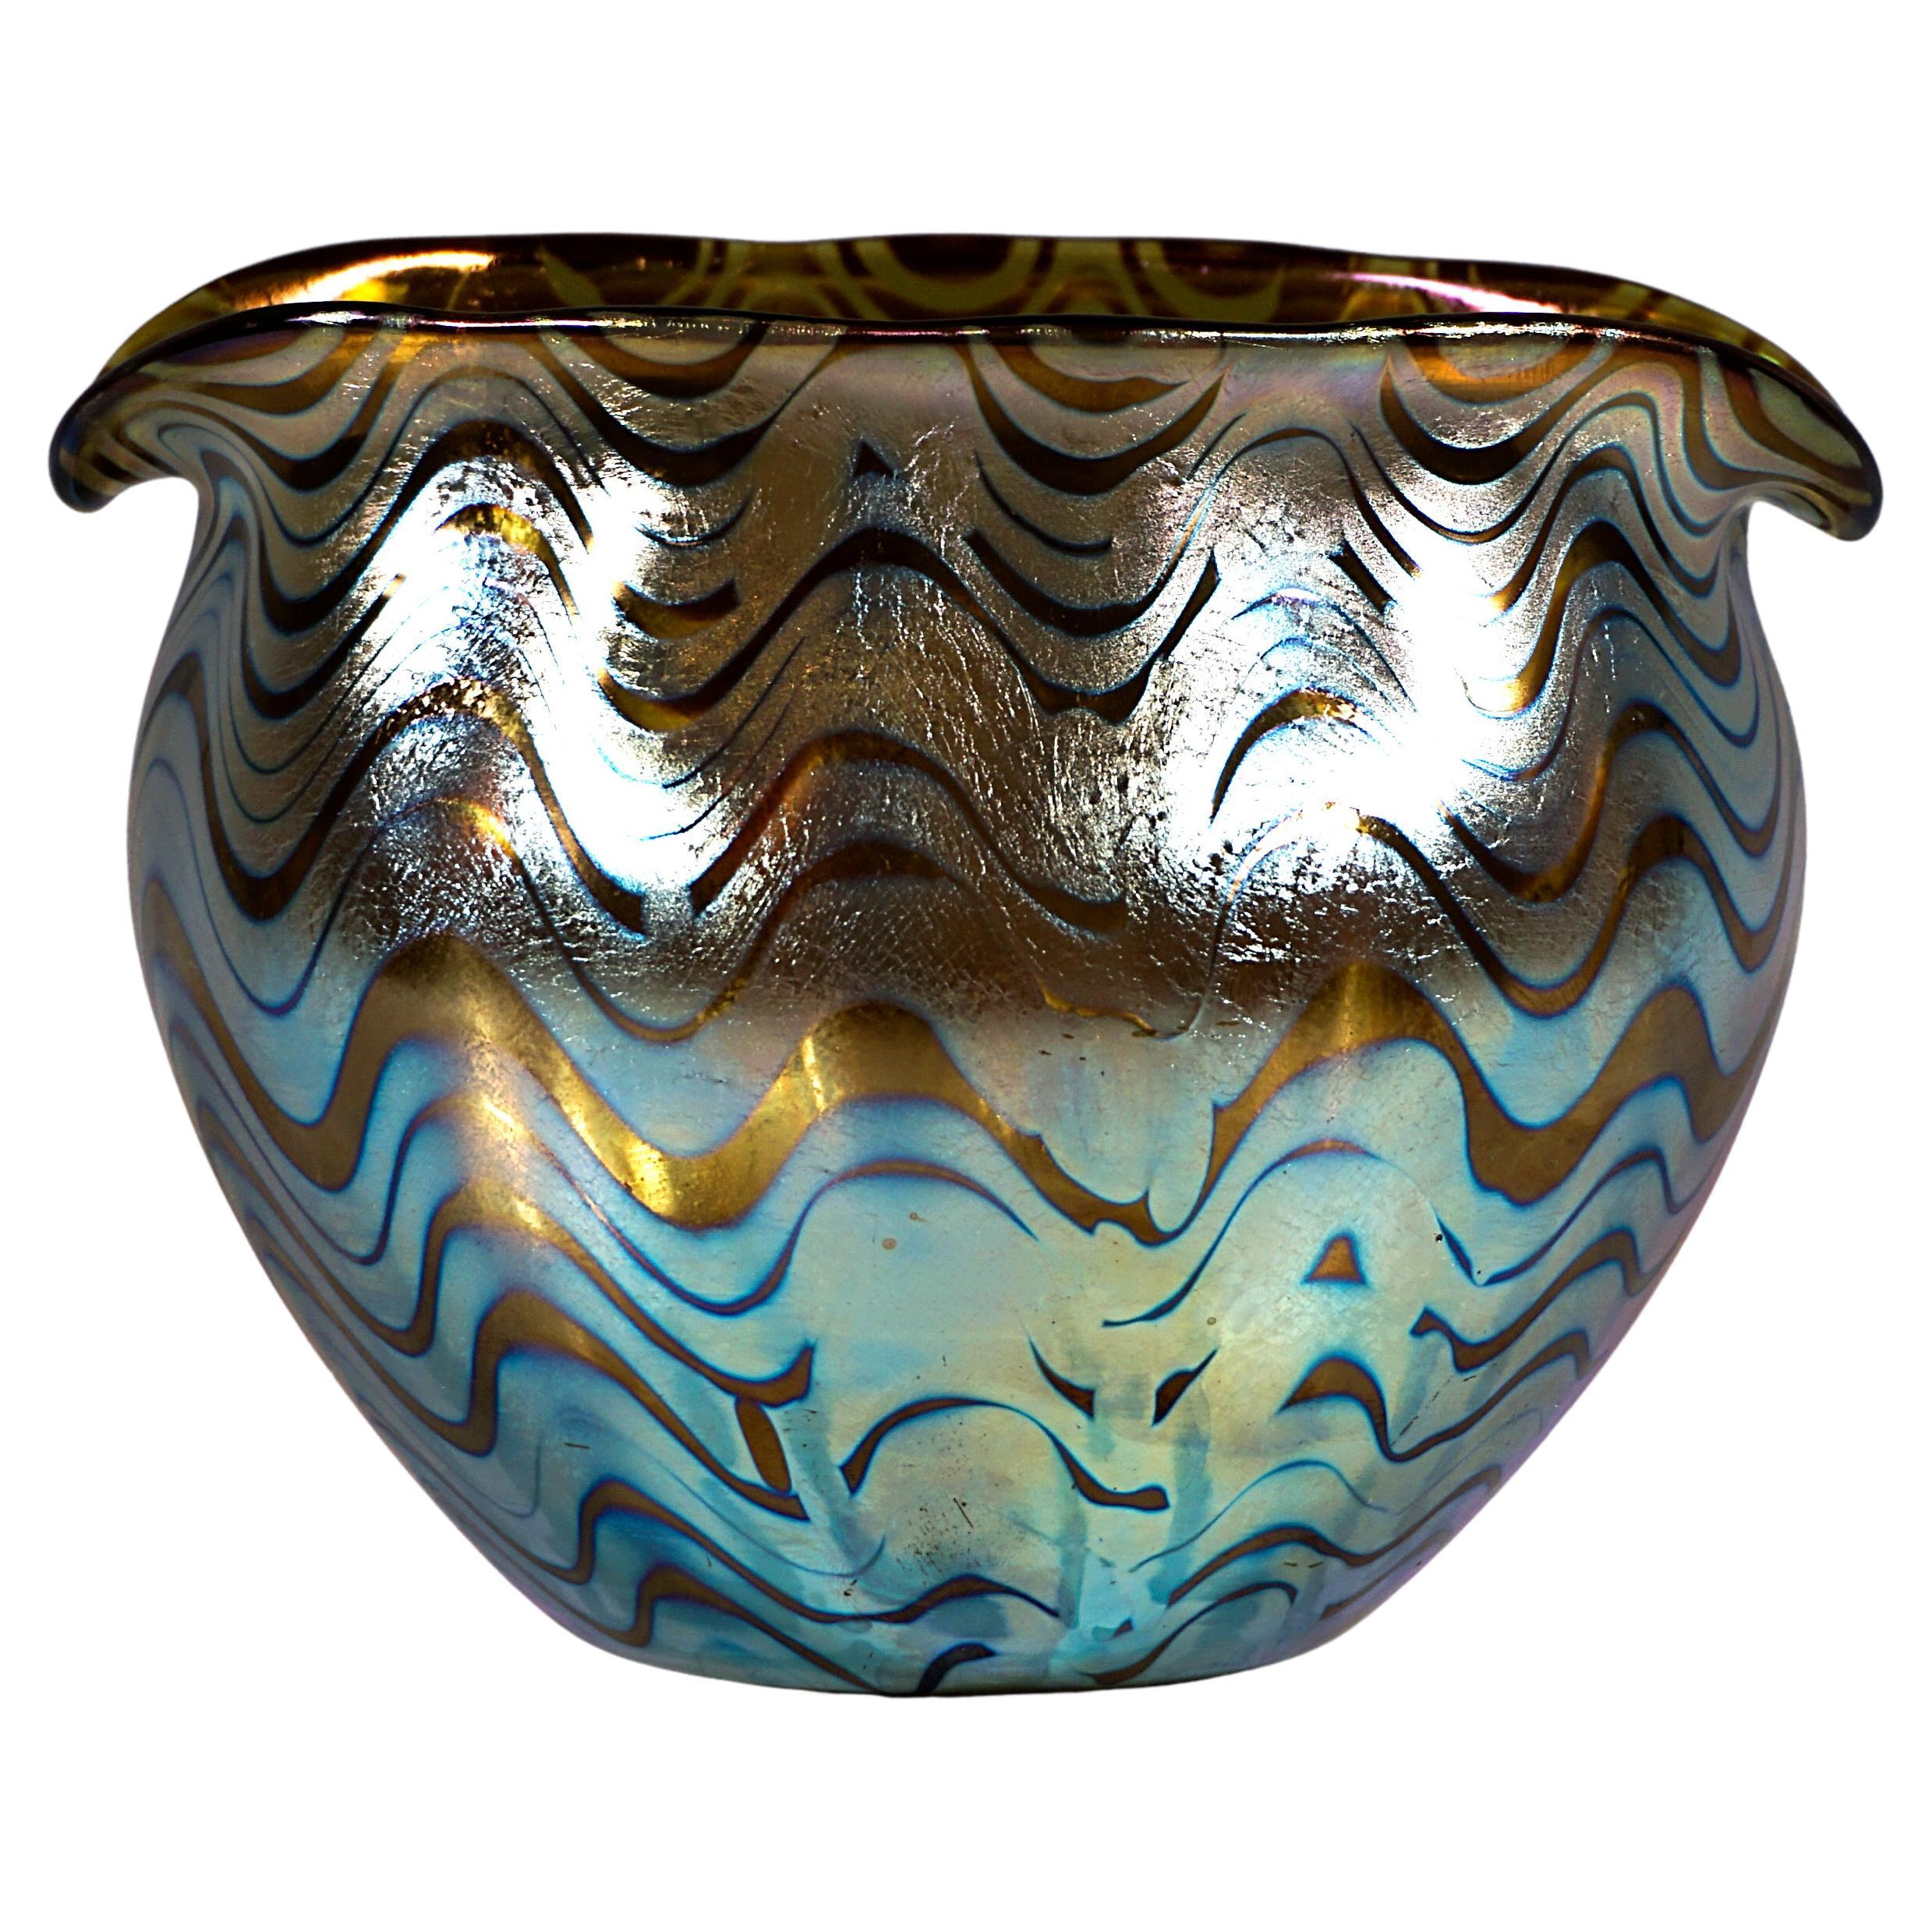 Loetz Art Nouveau Glass Vase Phenomenon Gre Crete 7767, Austria-Hungary, Ca 1900